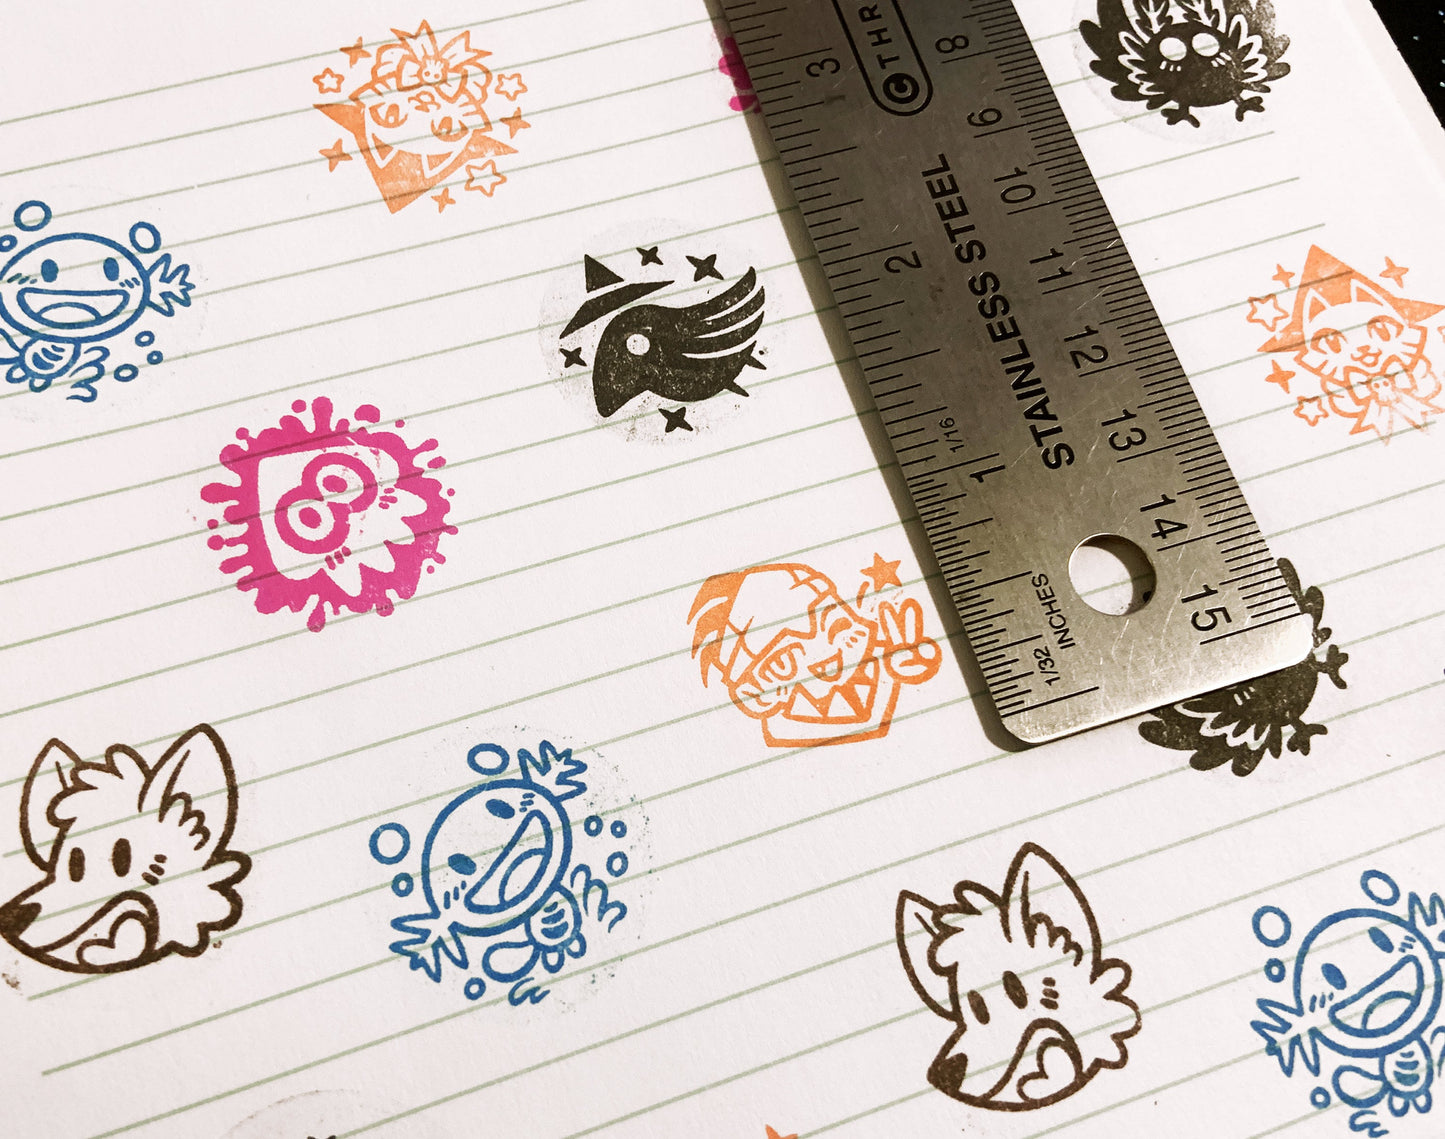 Furby Self-Inking Stamp